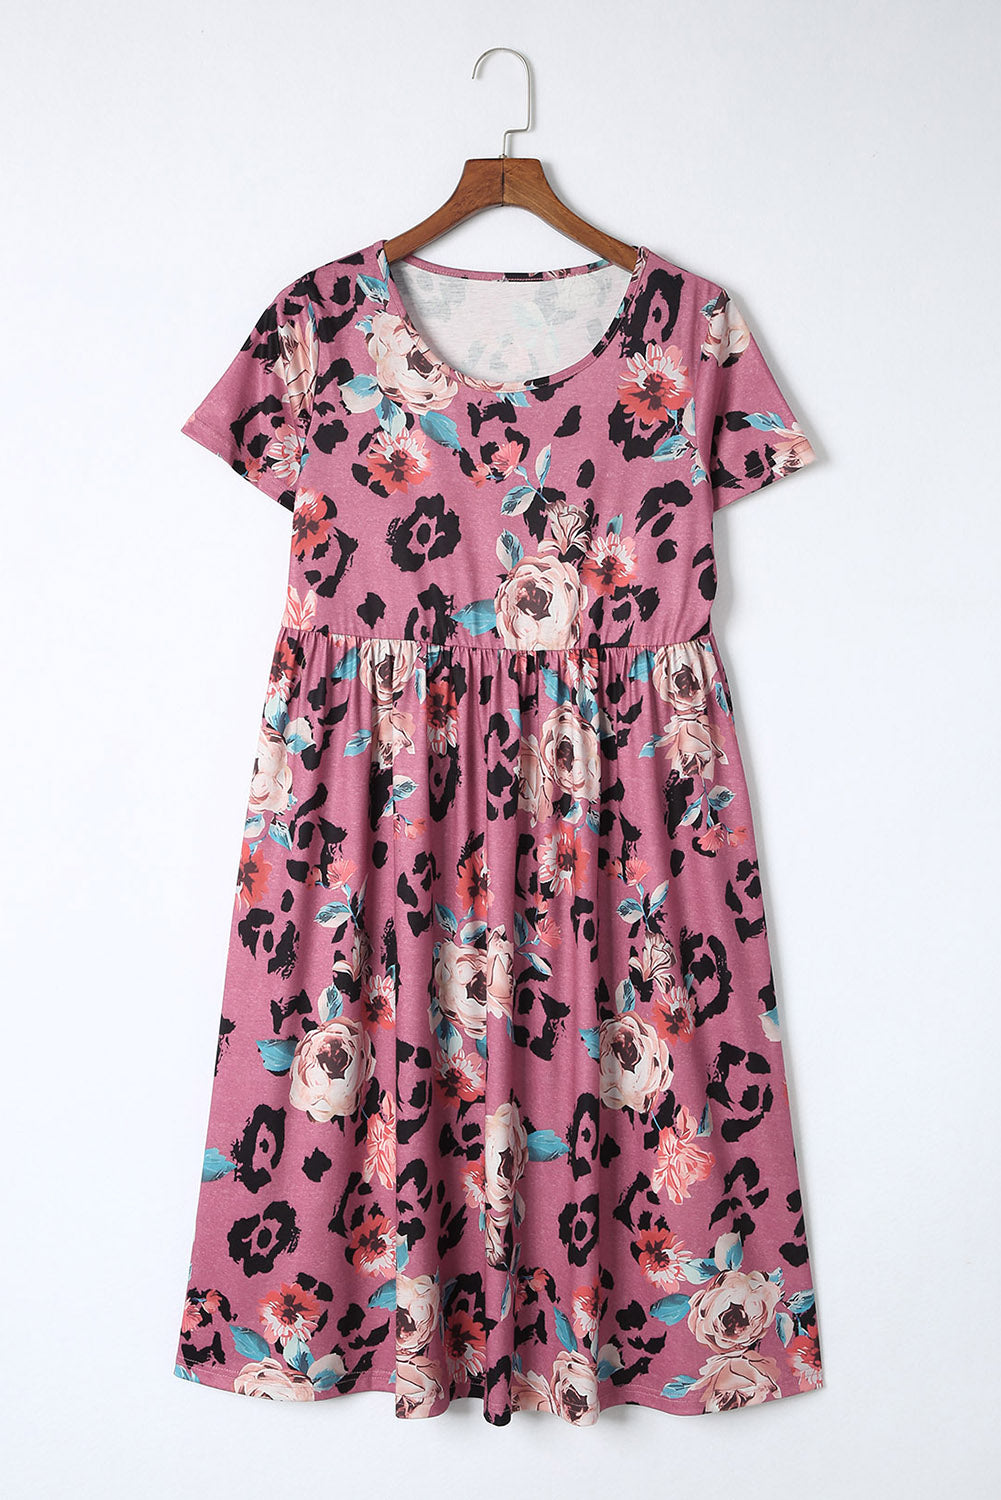 - Foral Print Short Sleeve A-line High Waist Dress - womens dresses at TFC&H Co.